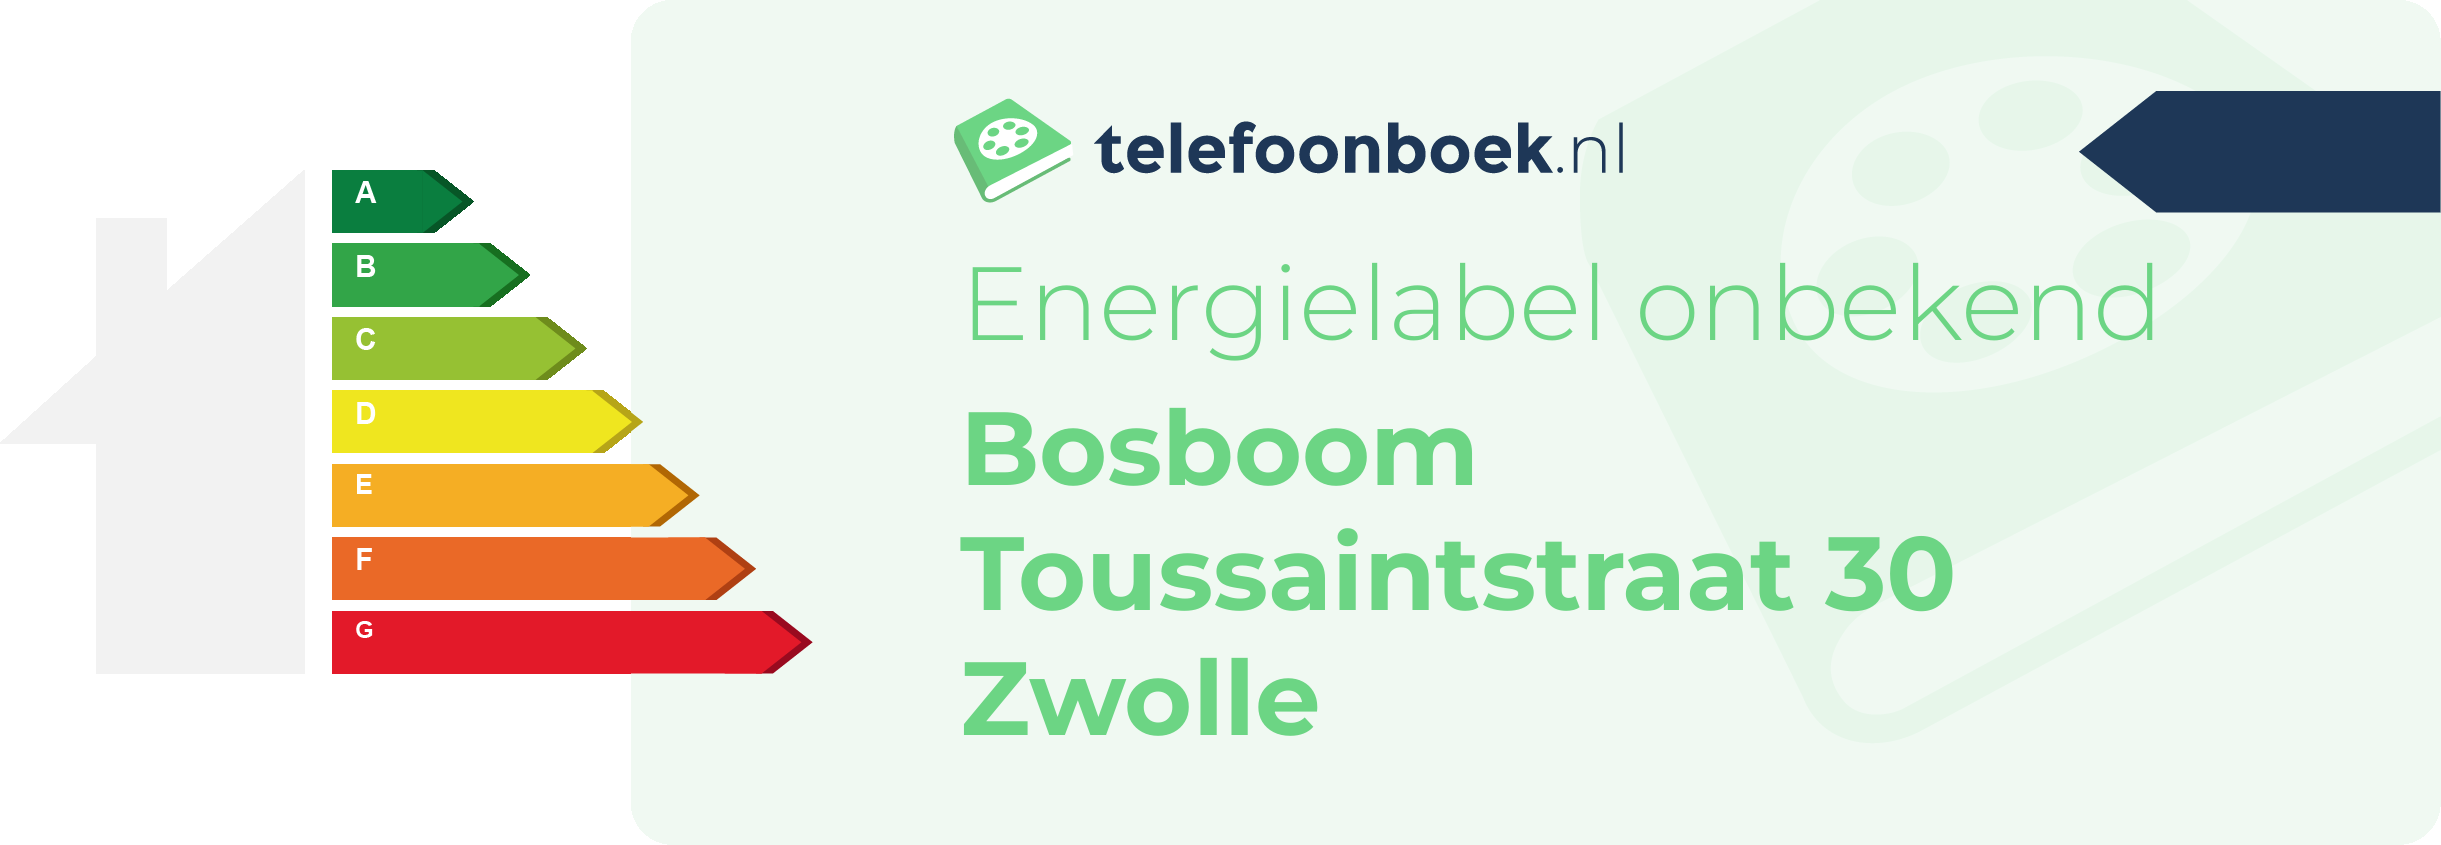 Energielabel Bosboom Toussaintstraat 30 Zwolle